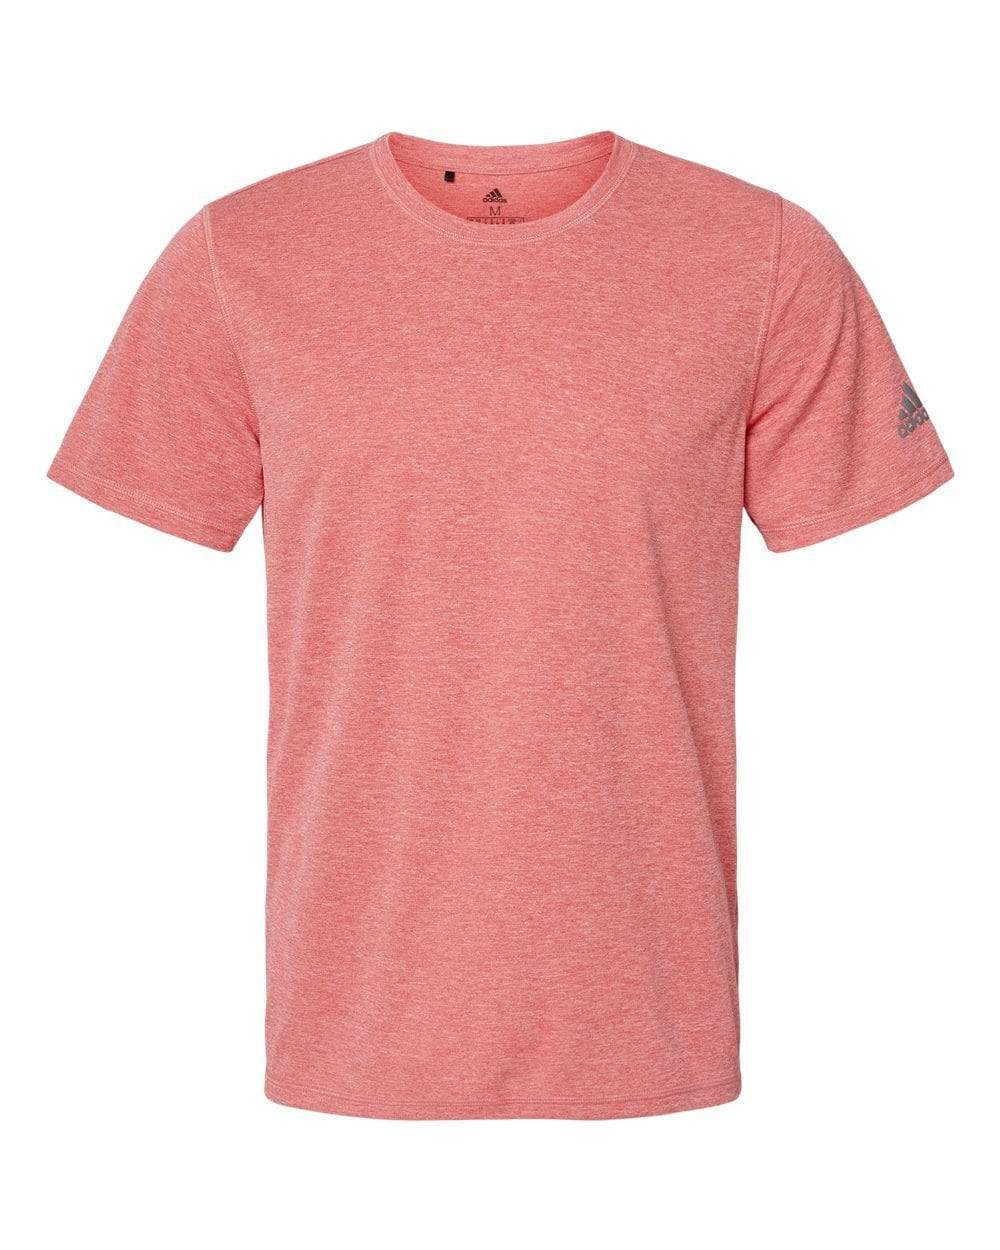 adidas T-shirts S / Power Red Heather Adidas - Men's Sport T-Shirt Heathered